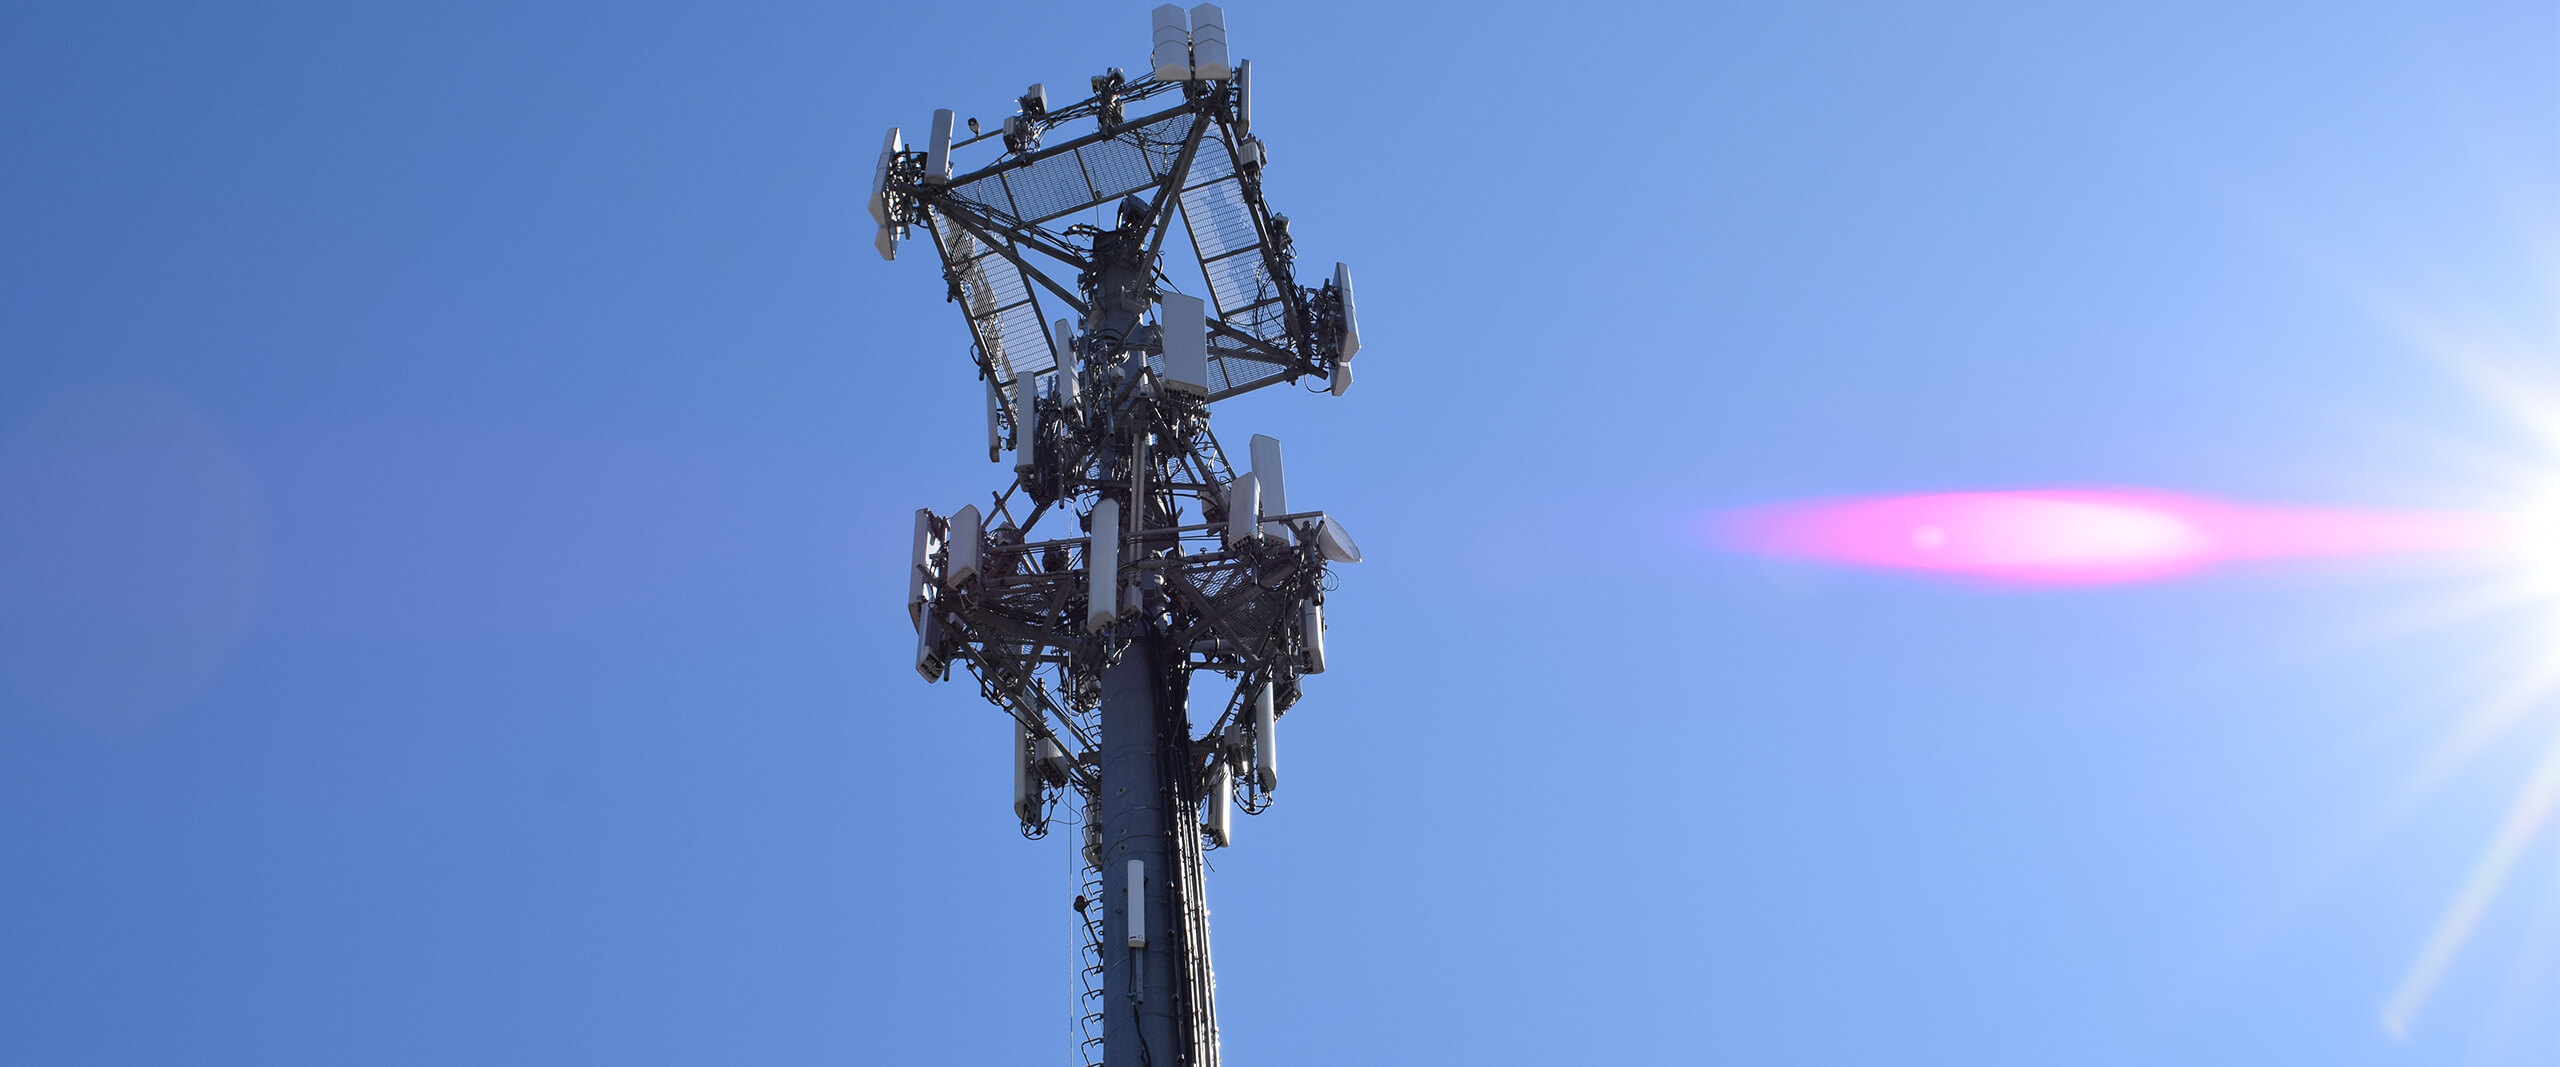 A wireless communications tower